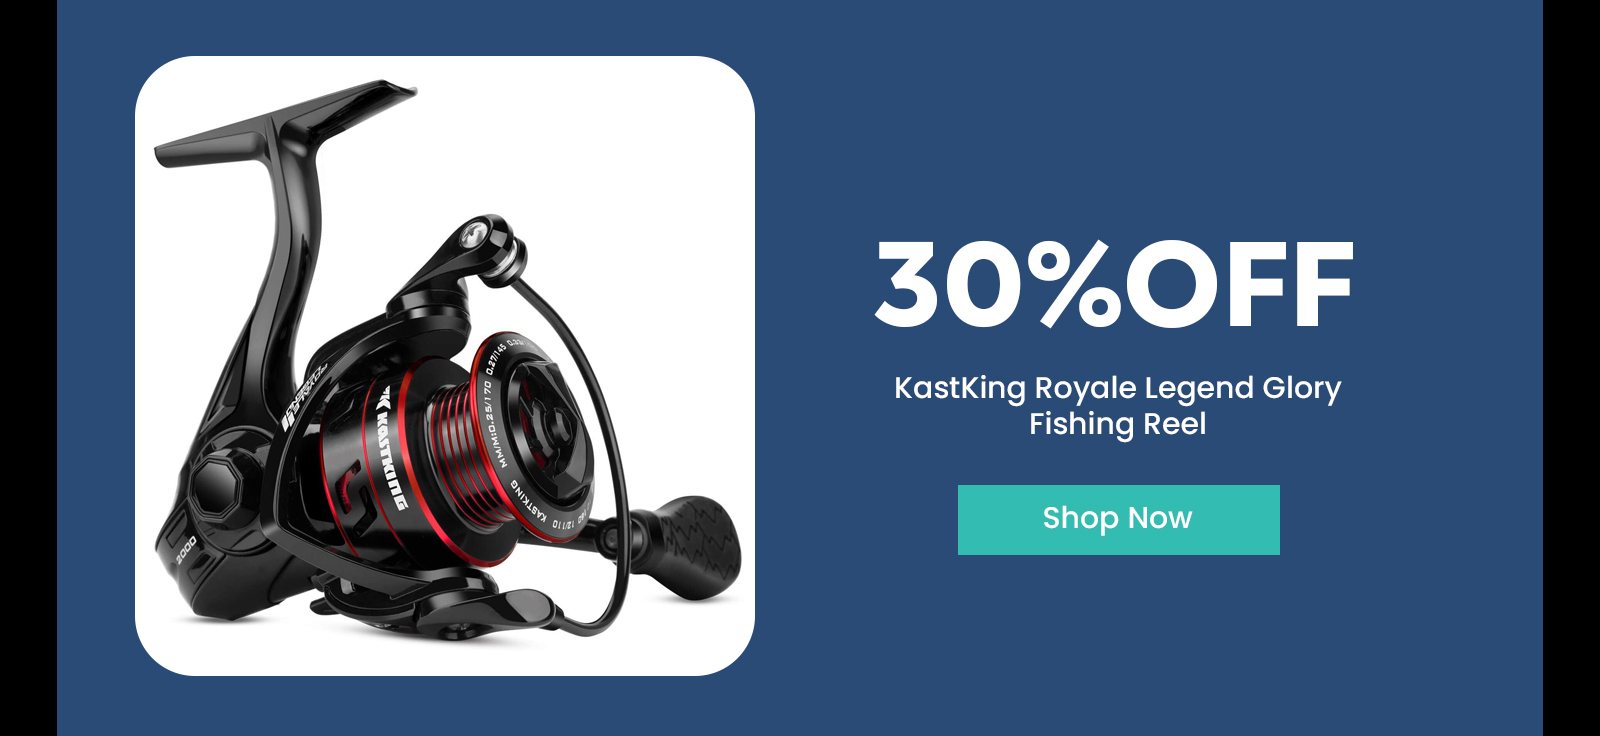 🔥 Hot Summer Flash Sale - $1 Kovert Fluorocarbon Fishing Line 🎣 Don't  Miss Out! - KastKing